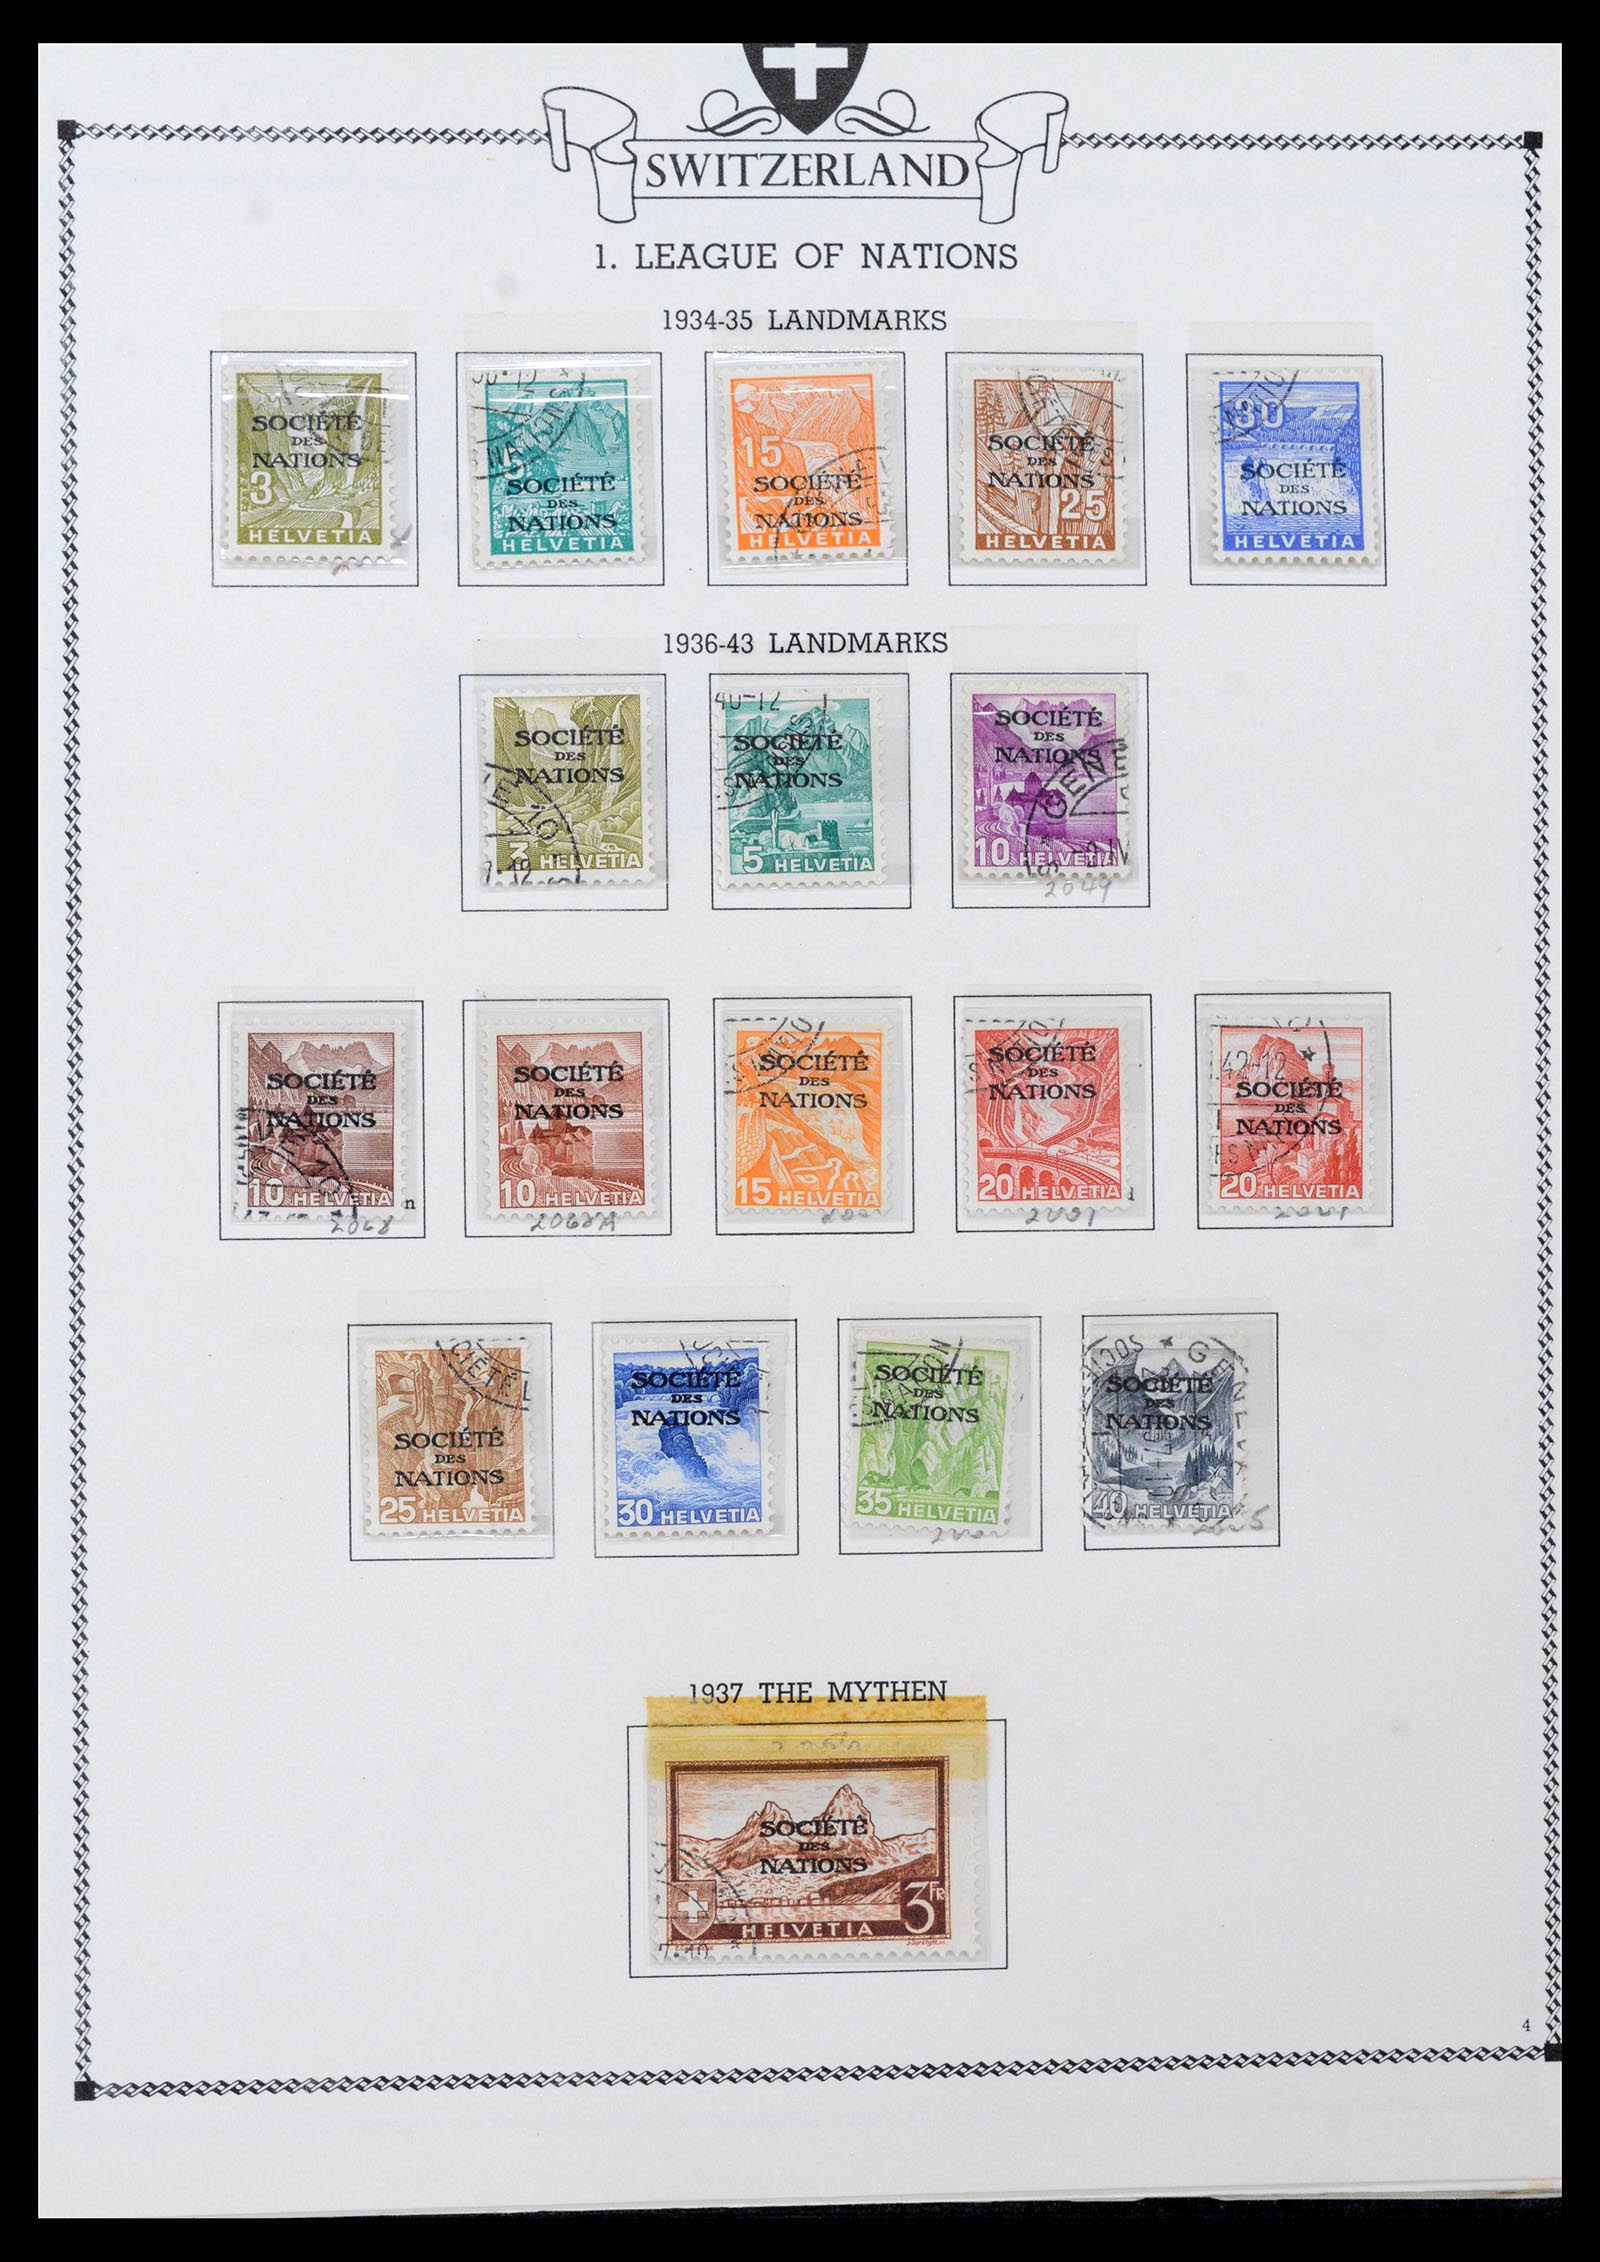 38905 0187 - Stamp collection 38905 Switzerland 1850-1995.